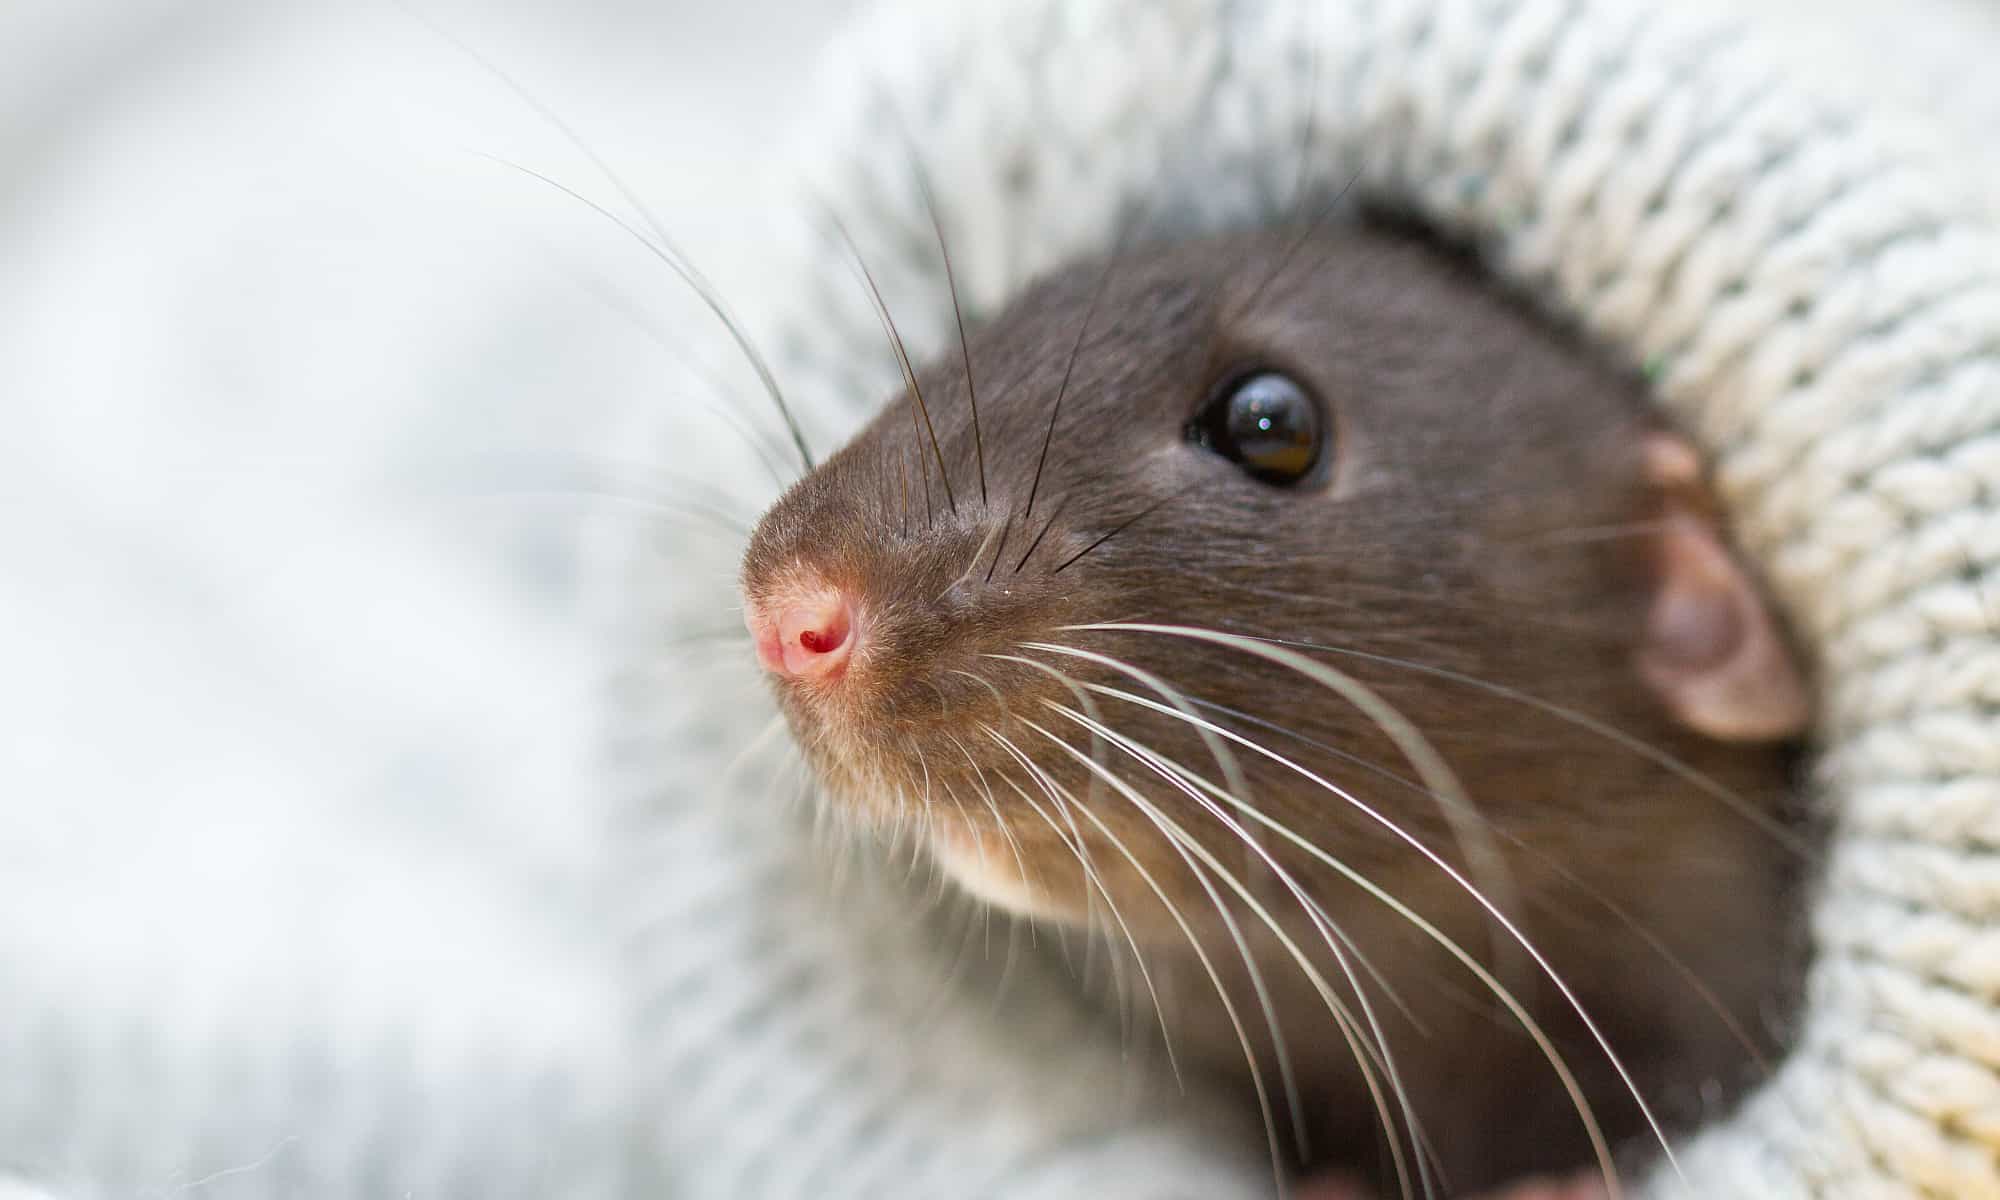 do rats make good pets?